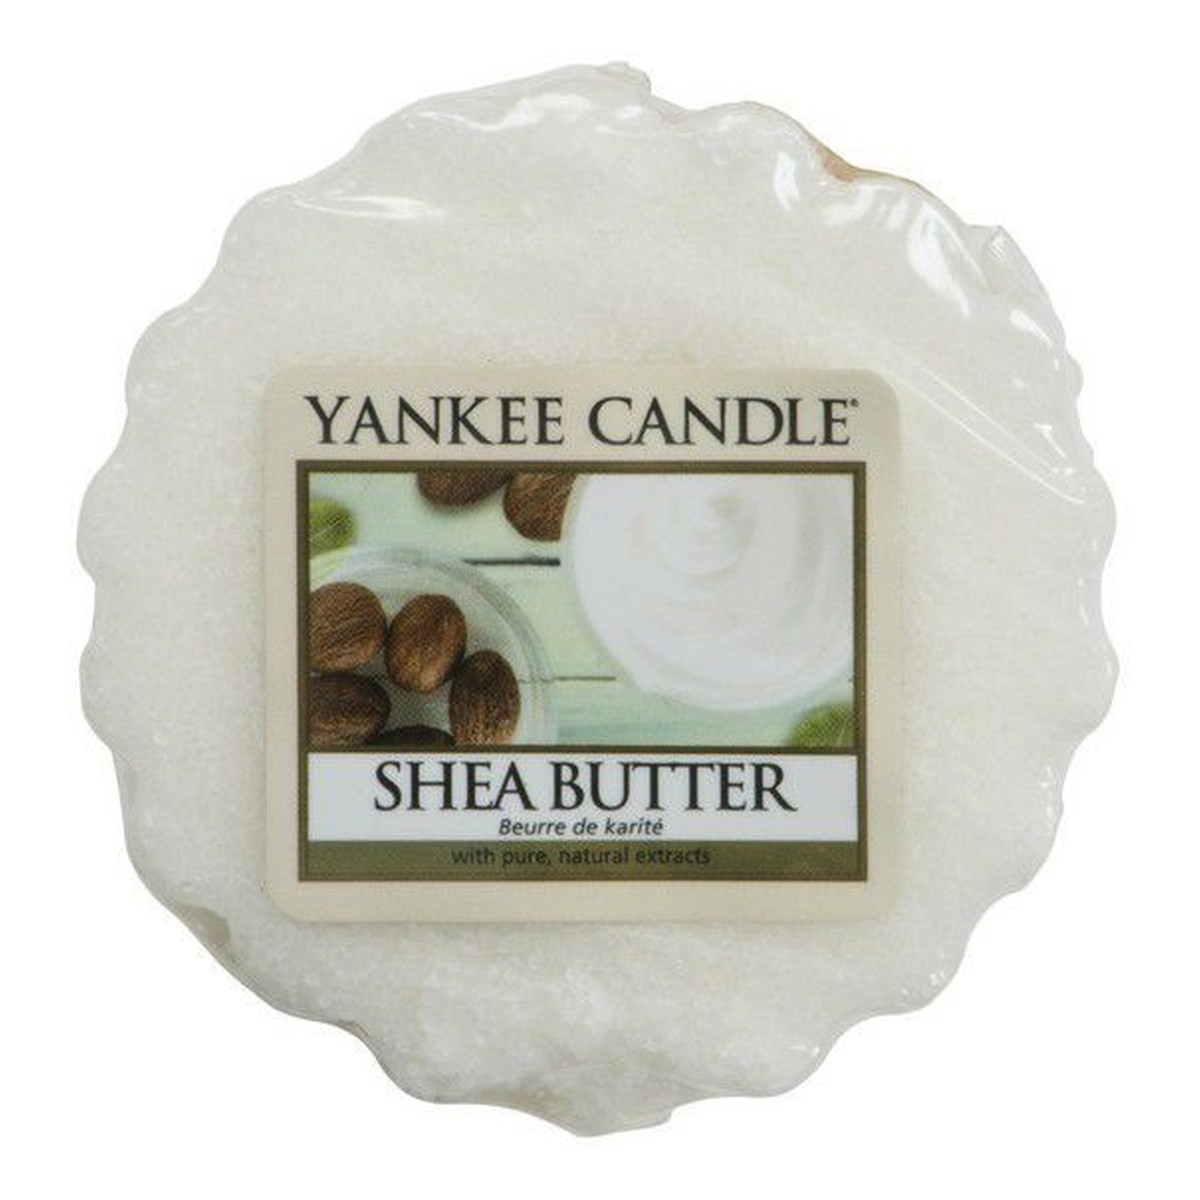 Yankee Candle Wax wosk zapachowy Shea Butter 22g